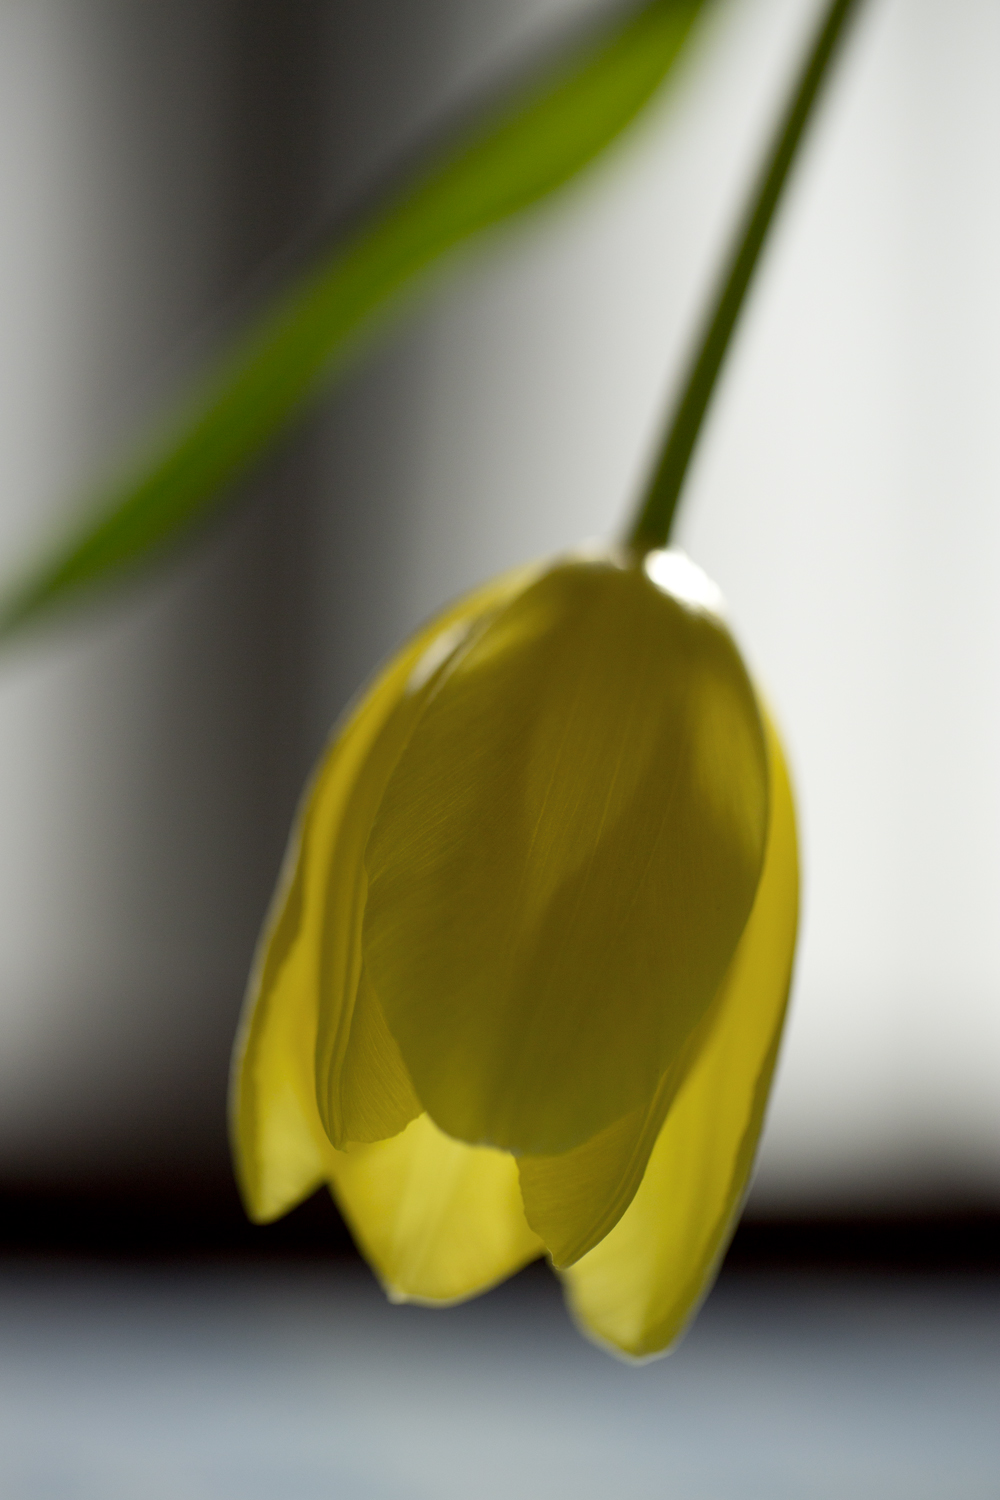 amys_yellow_tulips_02-11-16_4166.jpg